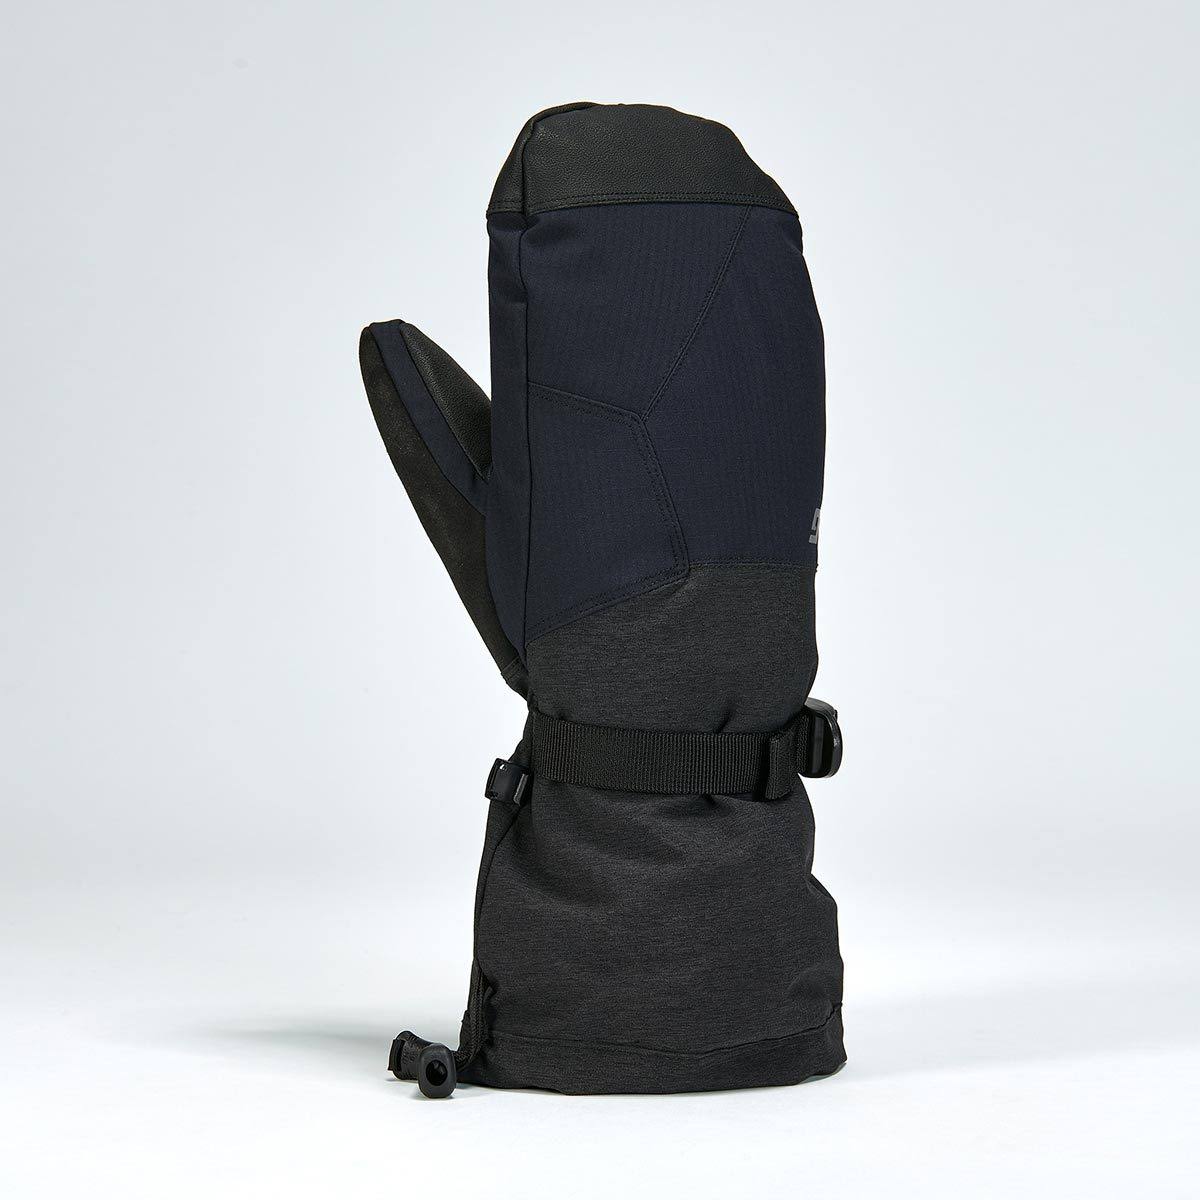 Gordini Men's Aquabloc Down Gauntlet III Gloves S Black